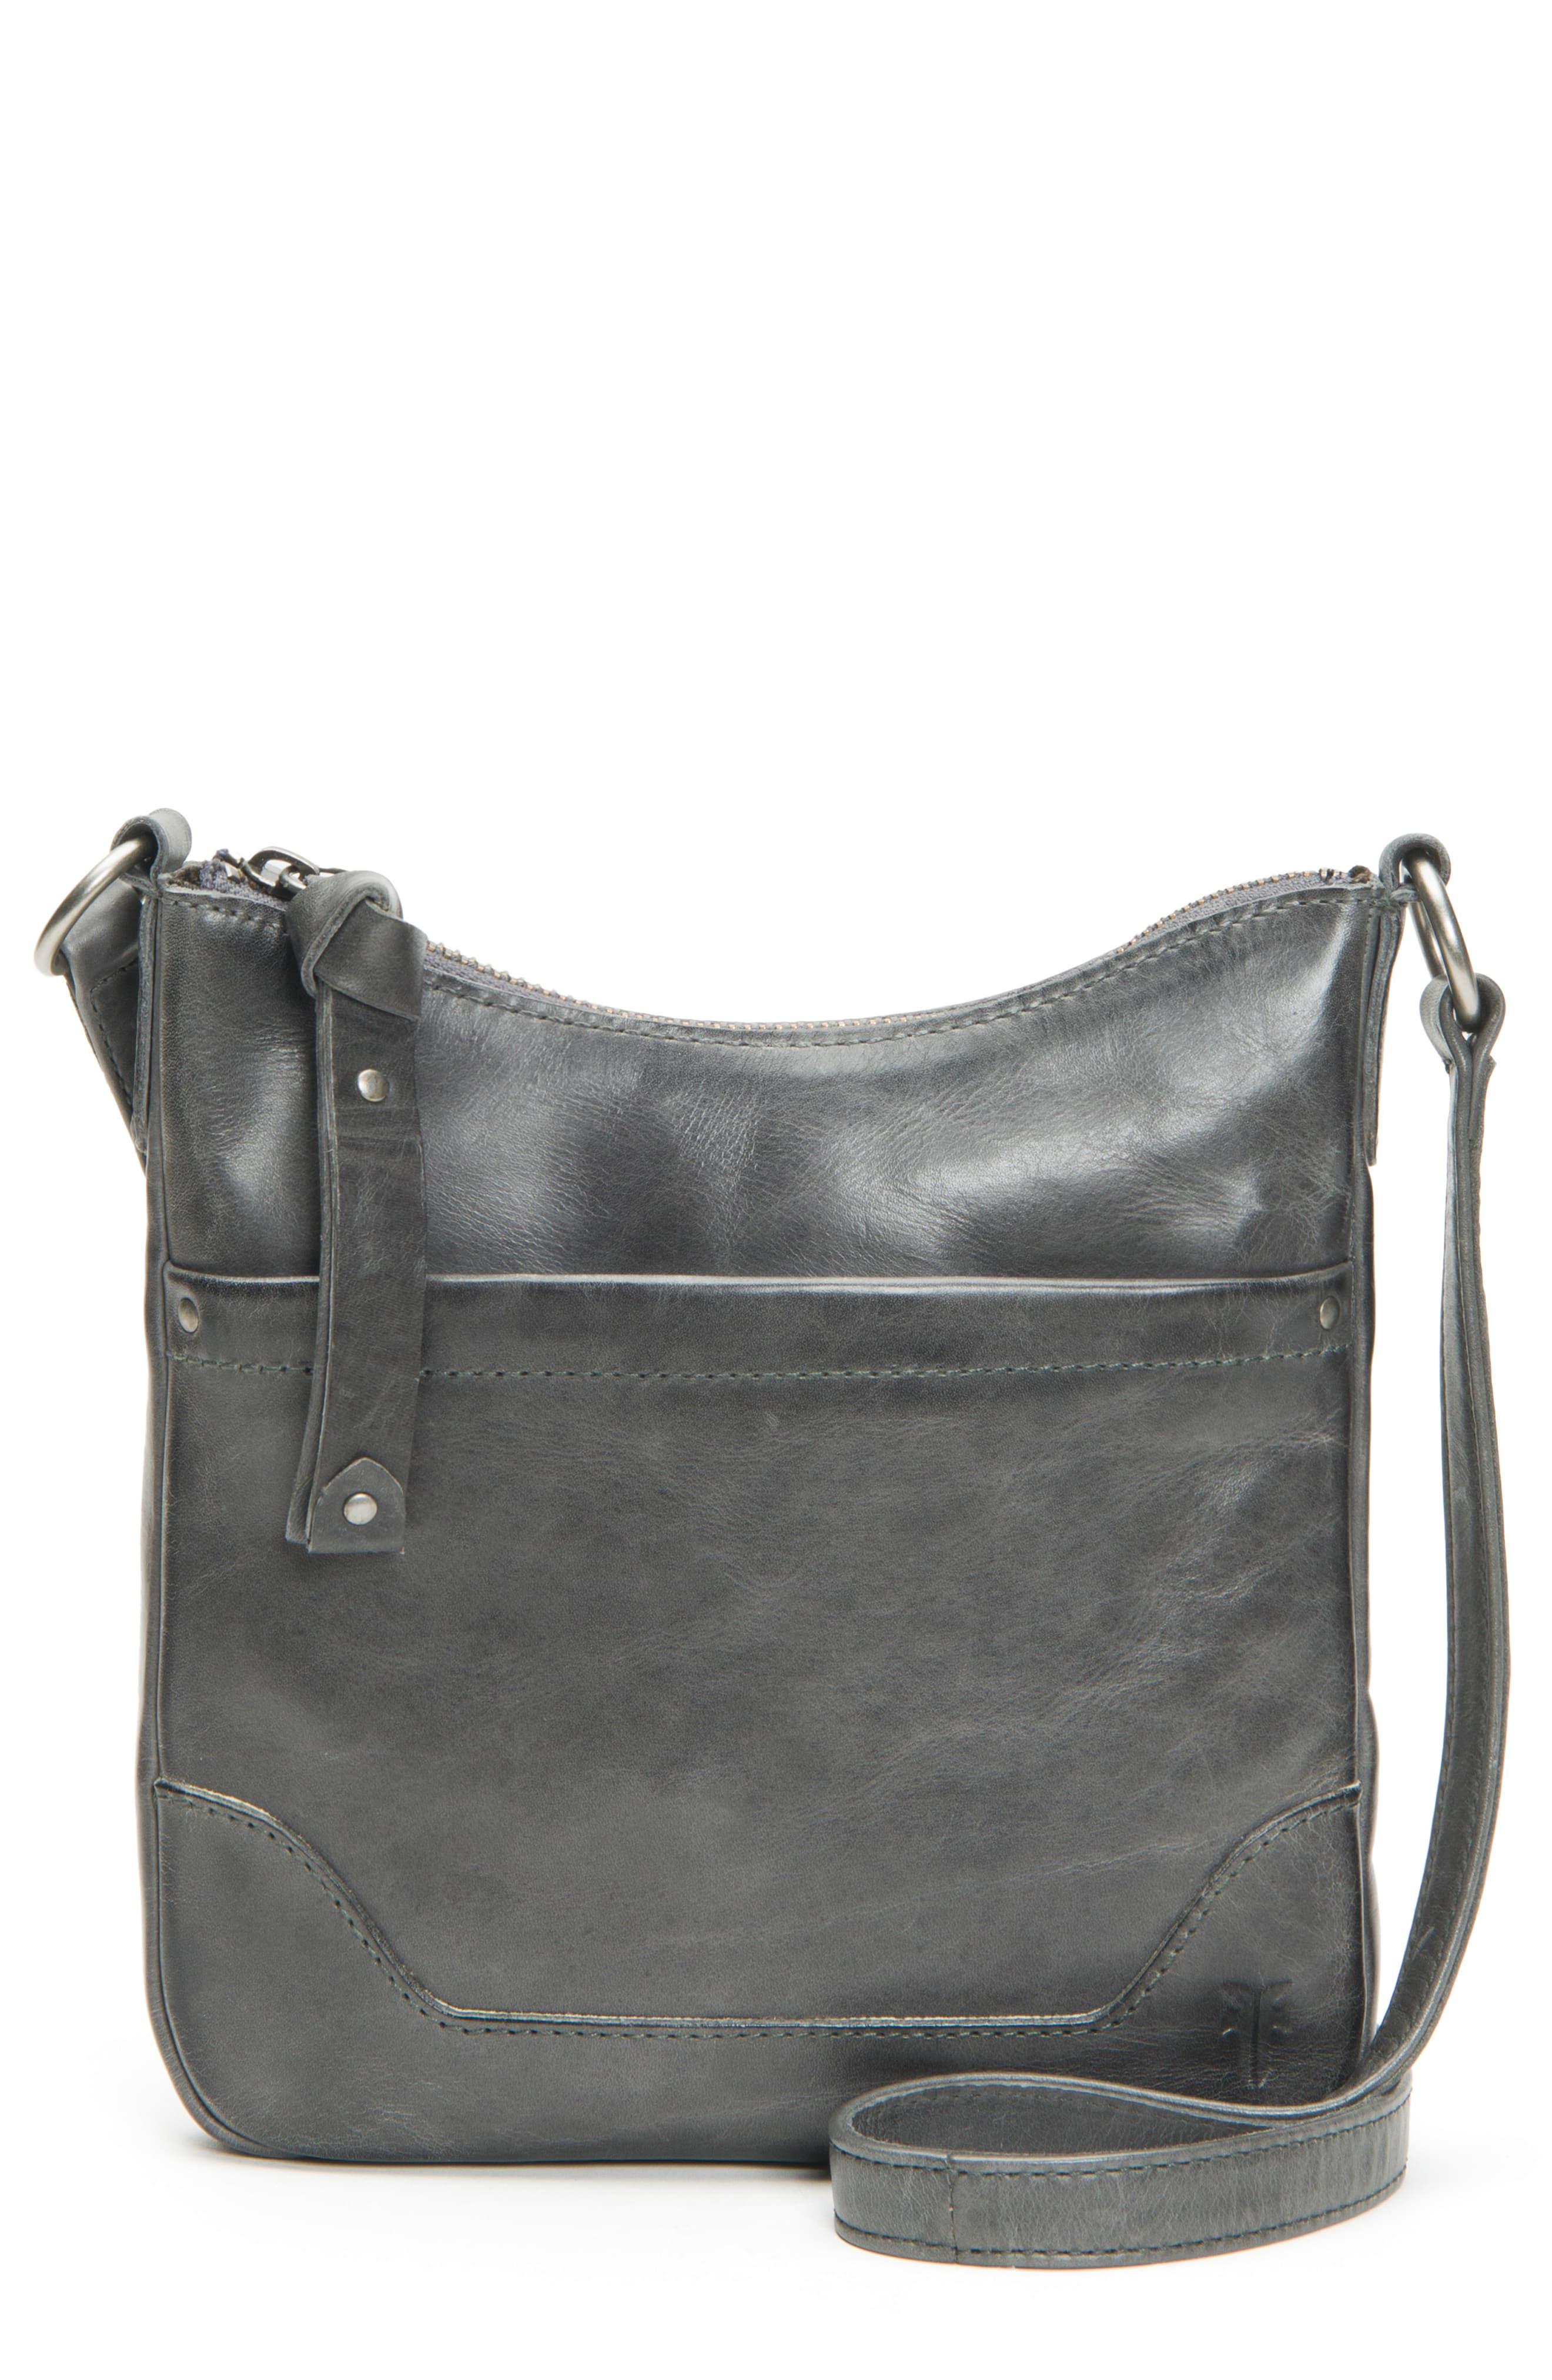 Frye Melissa Swing Leather Crossbody Bag in Carbon (Gray) - Lyst